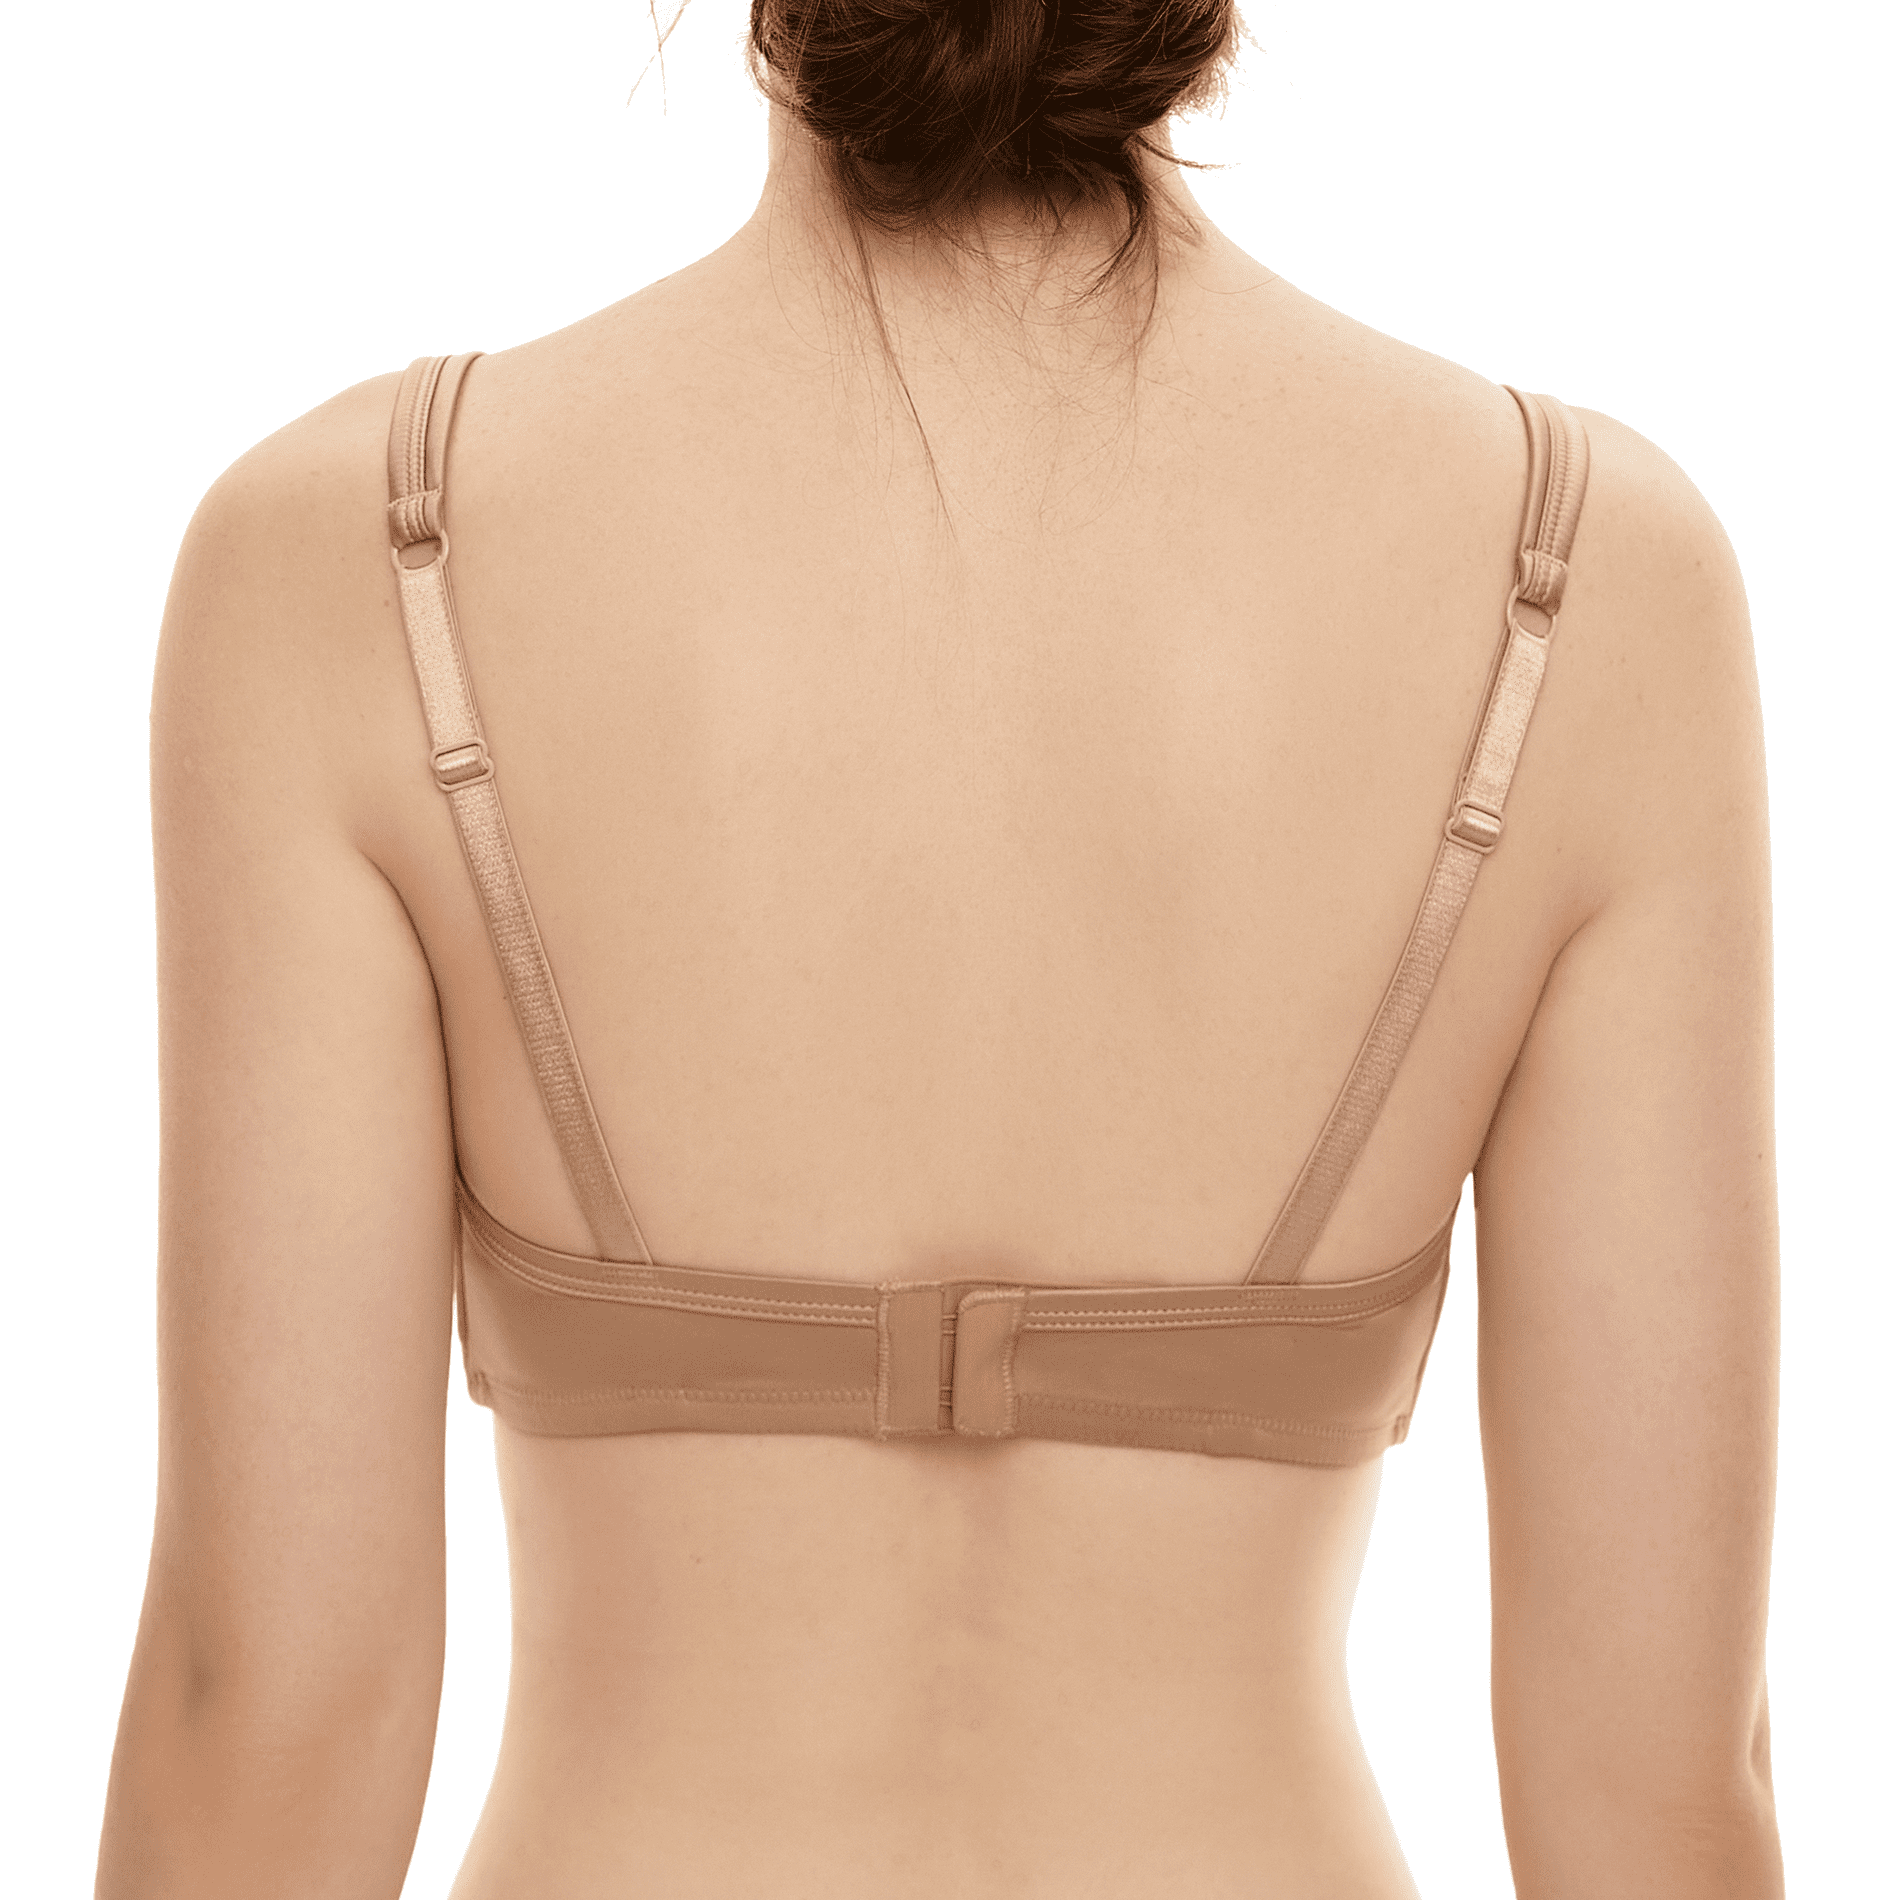 BIMEI Women's Mastectomy Bra Coolmax Wire Free Pocketed Post-Surgery  Everyday Bra 2388,Light Nude,38C